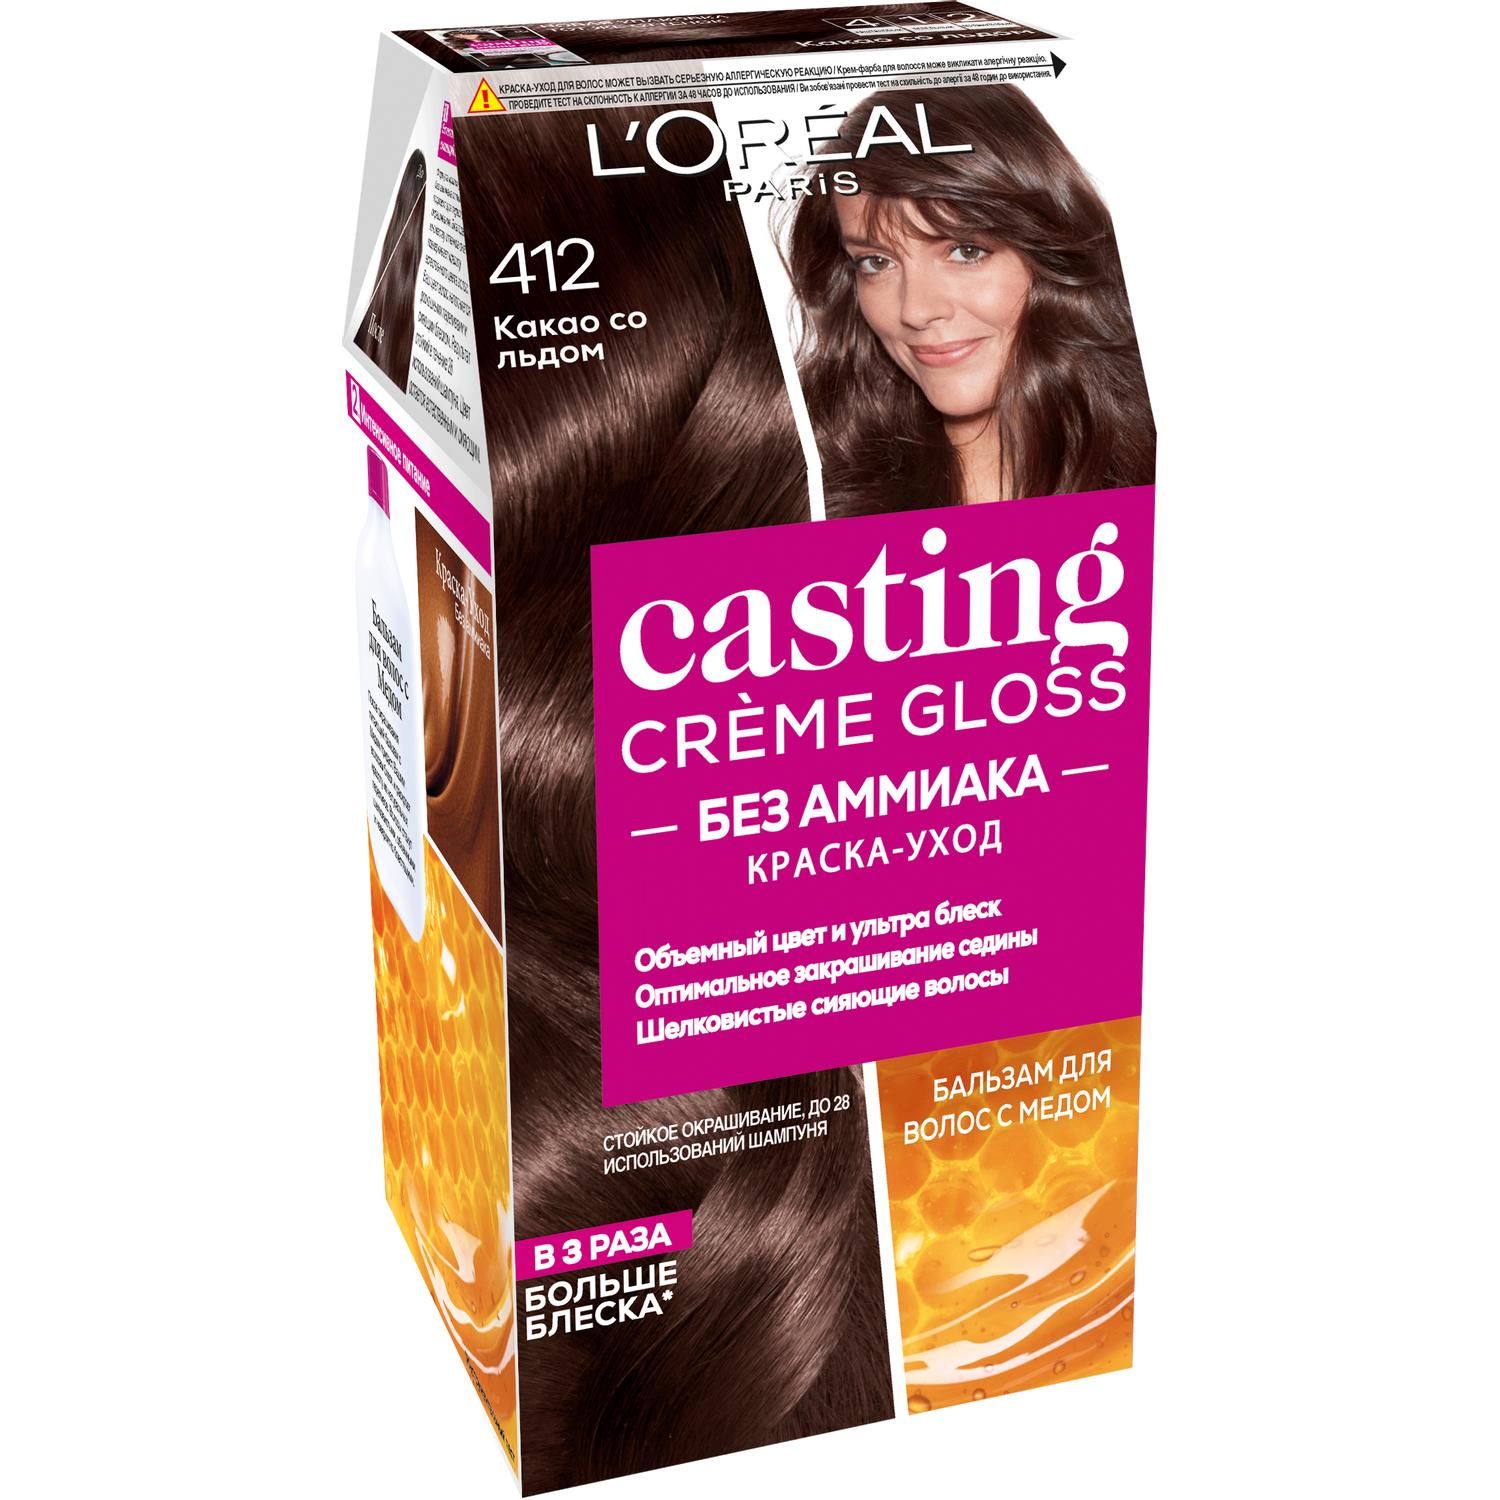 Краска L’Oreal Casting Creme Gloss 412 254 мл Какао со льдом (A5713822) крем краска для волос аммиачная 4 шатен